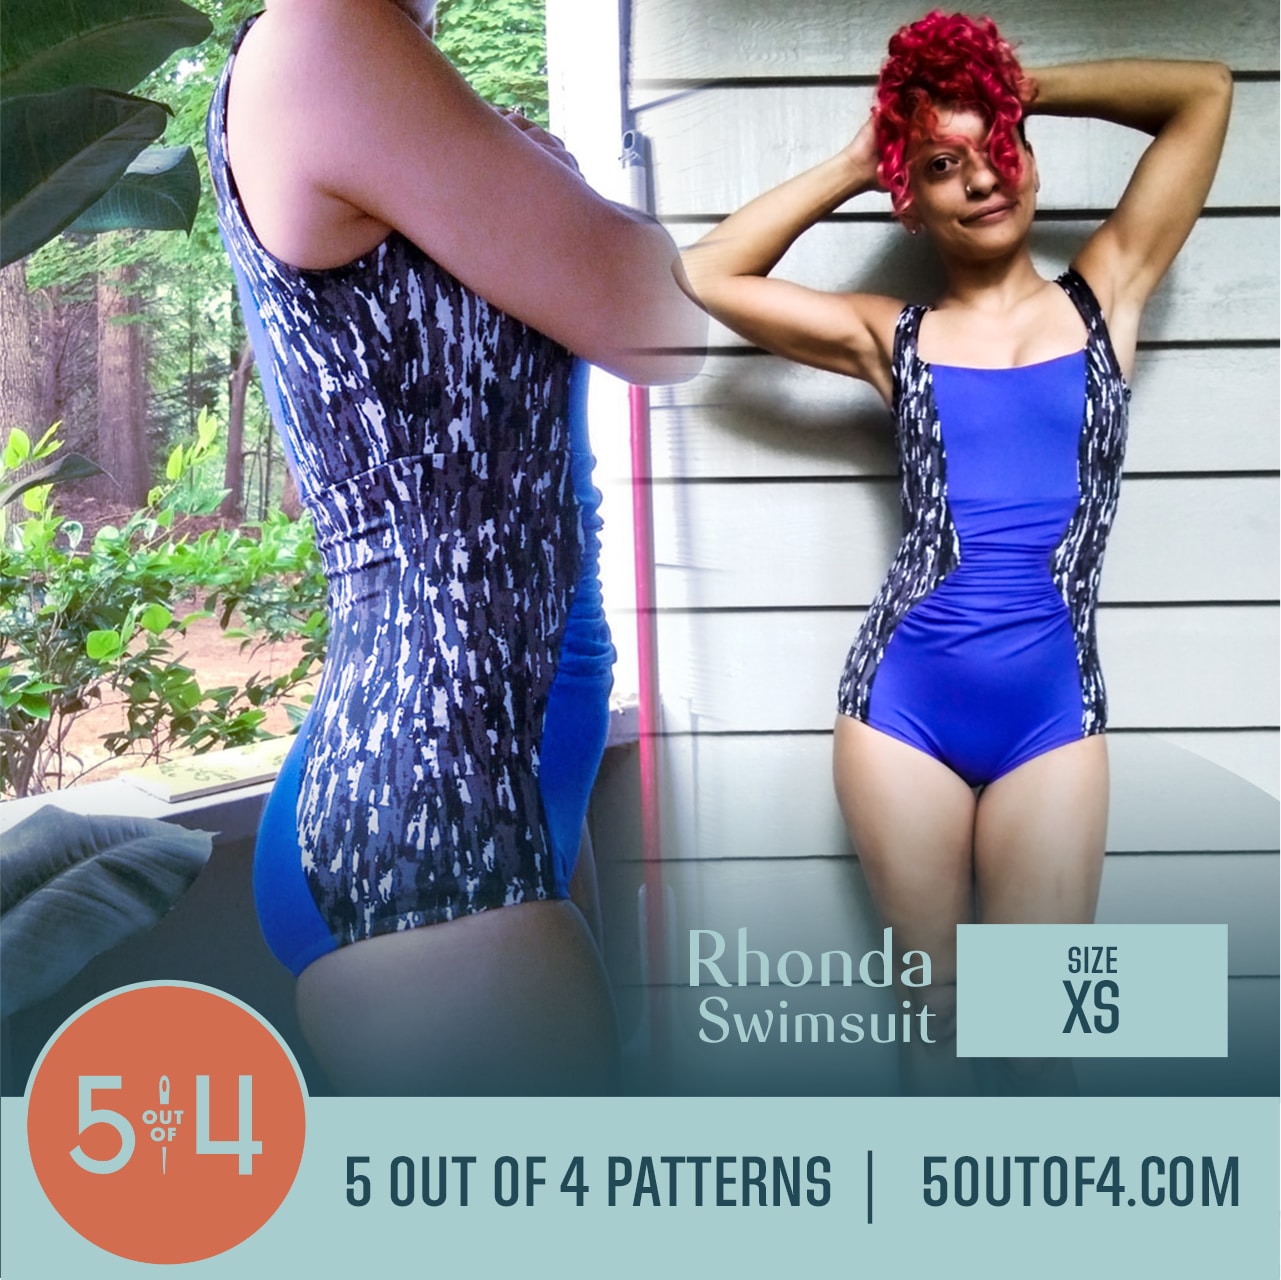 Rhonda Swimsuit